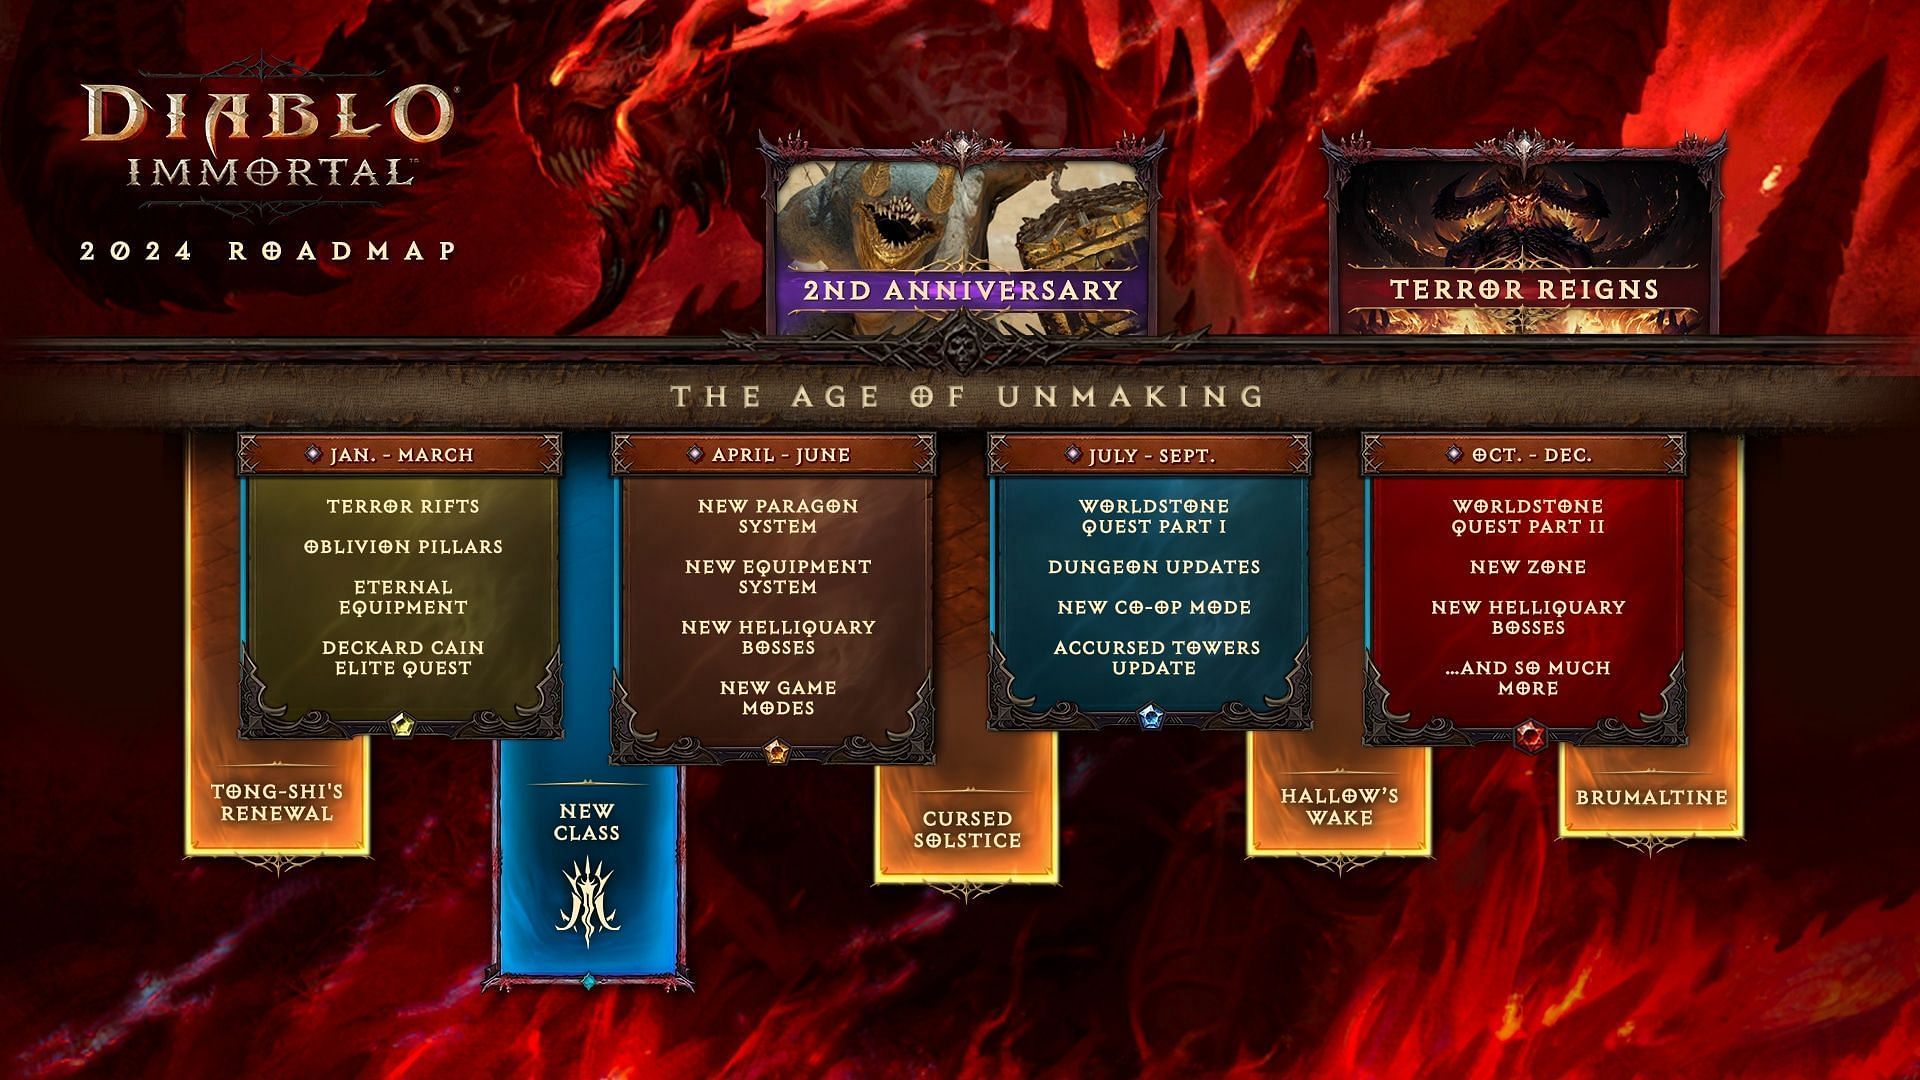 2024 roadmap for Diablo Immortal (Image via Blizzard Entertainment)